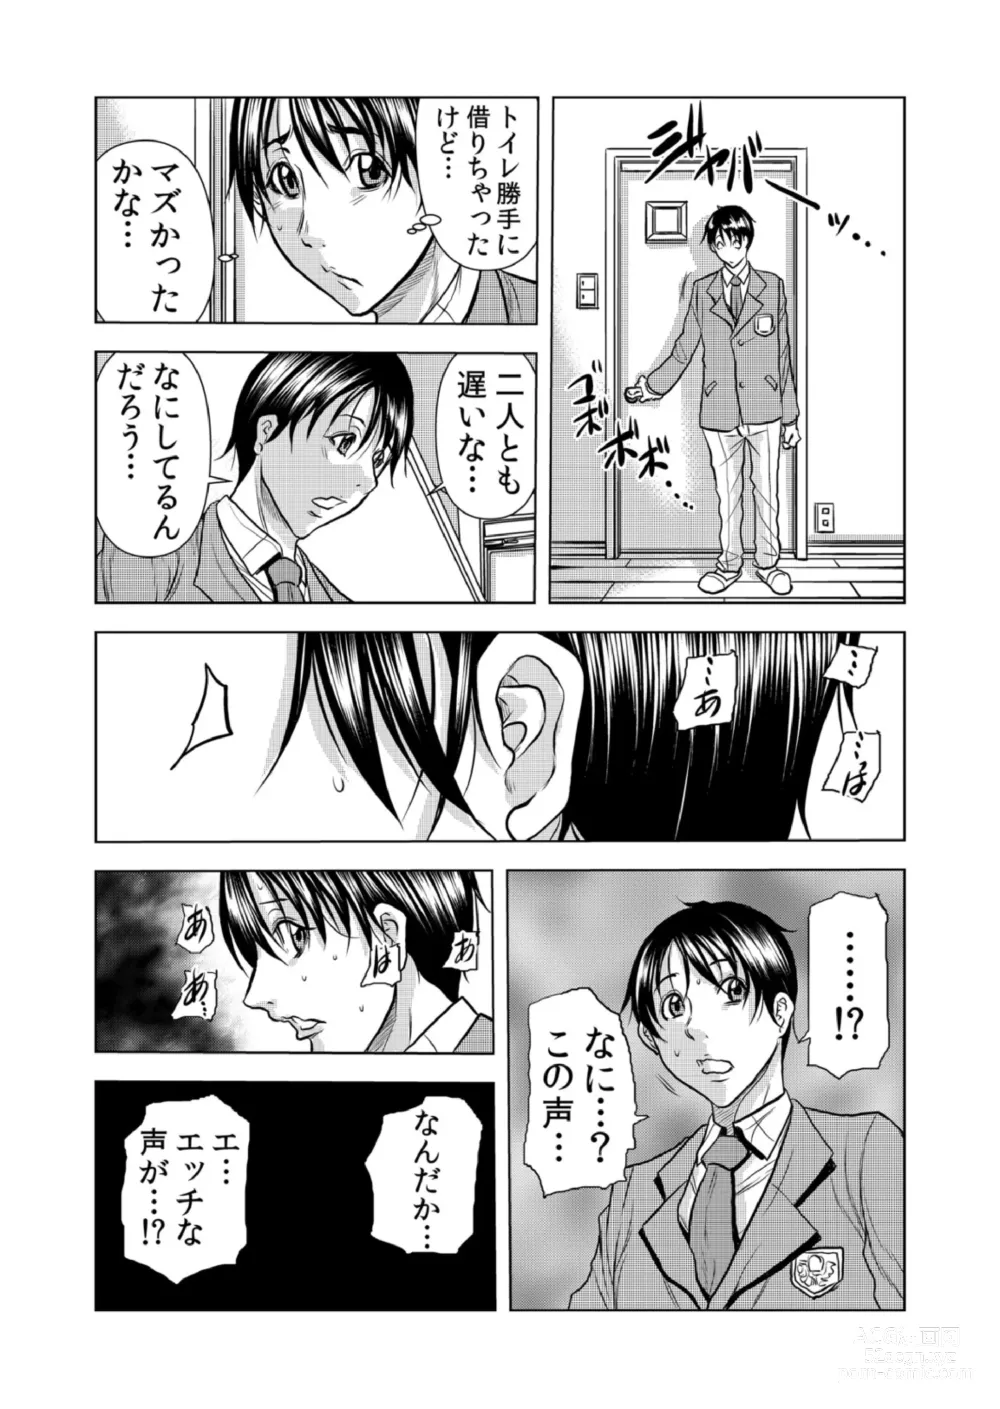 Page 25 of manga Mamasan,yobai ha OK desuka? VOL9